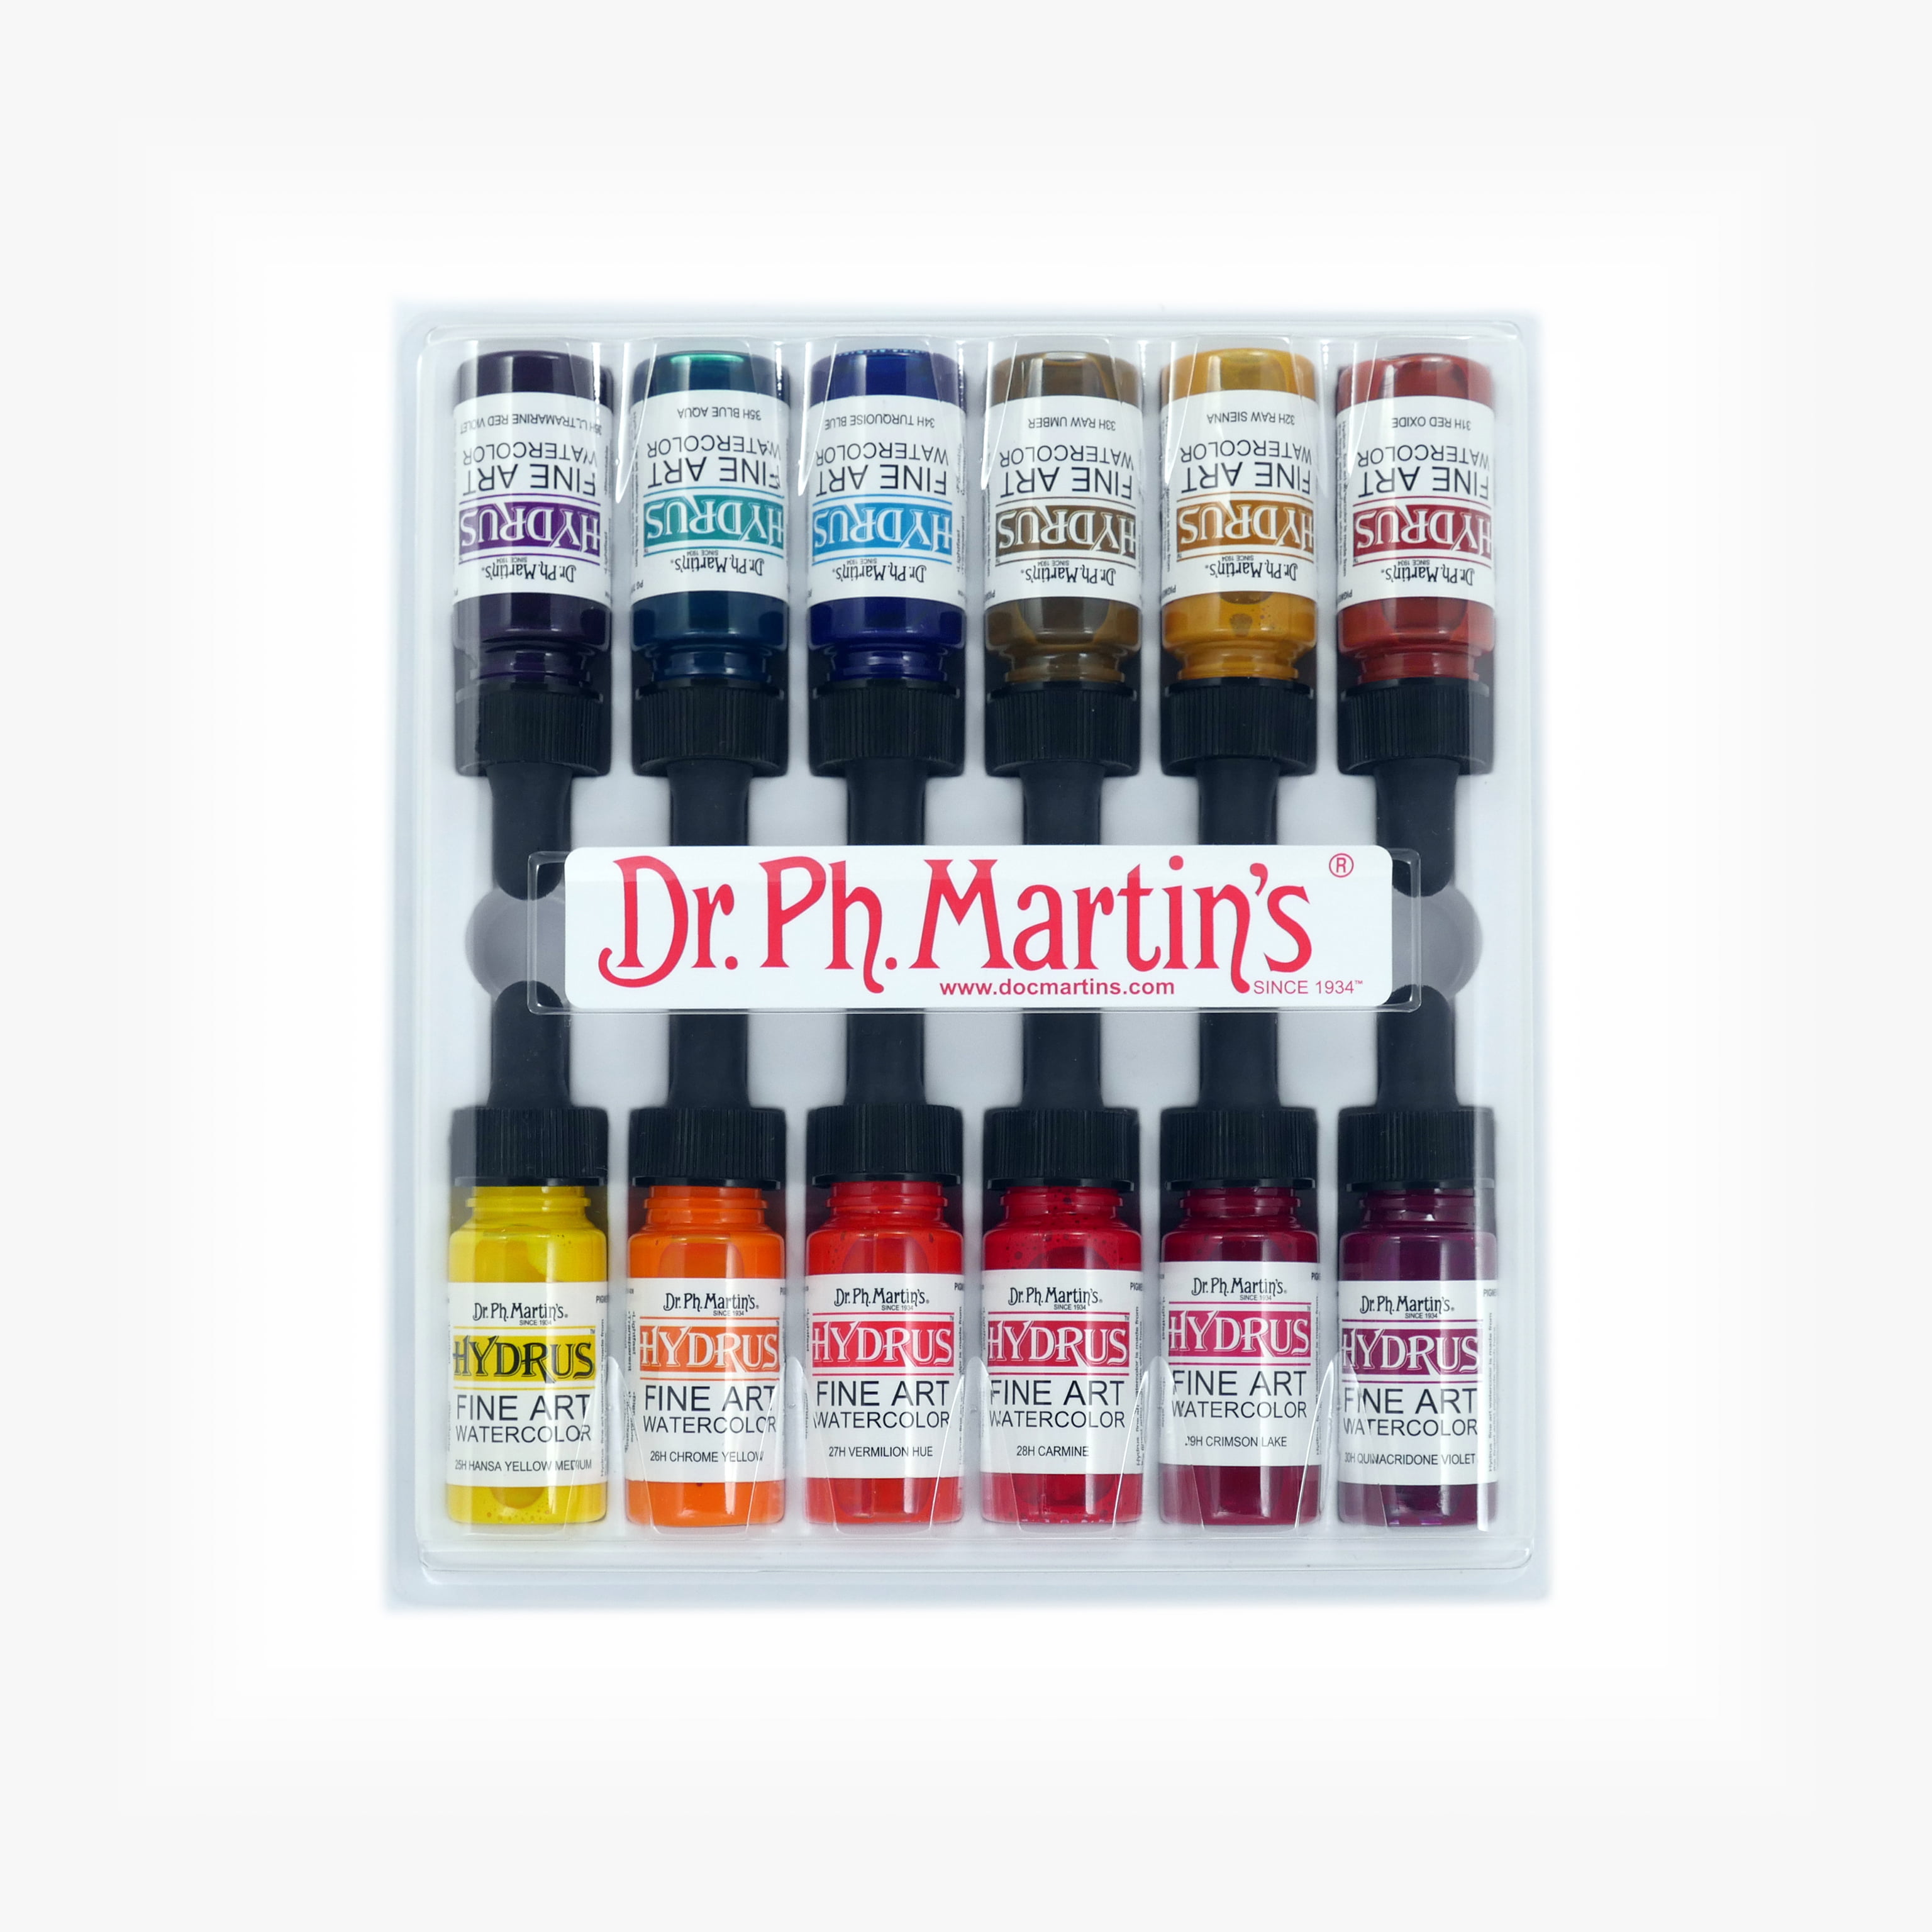 Dr. Ph. Martin's Hydrus Fine Art Watercolor, 0.5 Oz, Set Of 12 (Set 3) - Walmart.com